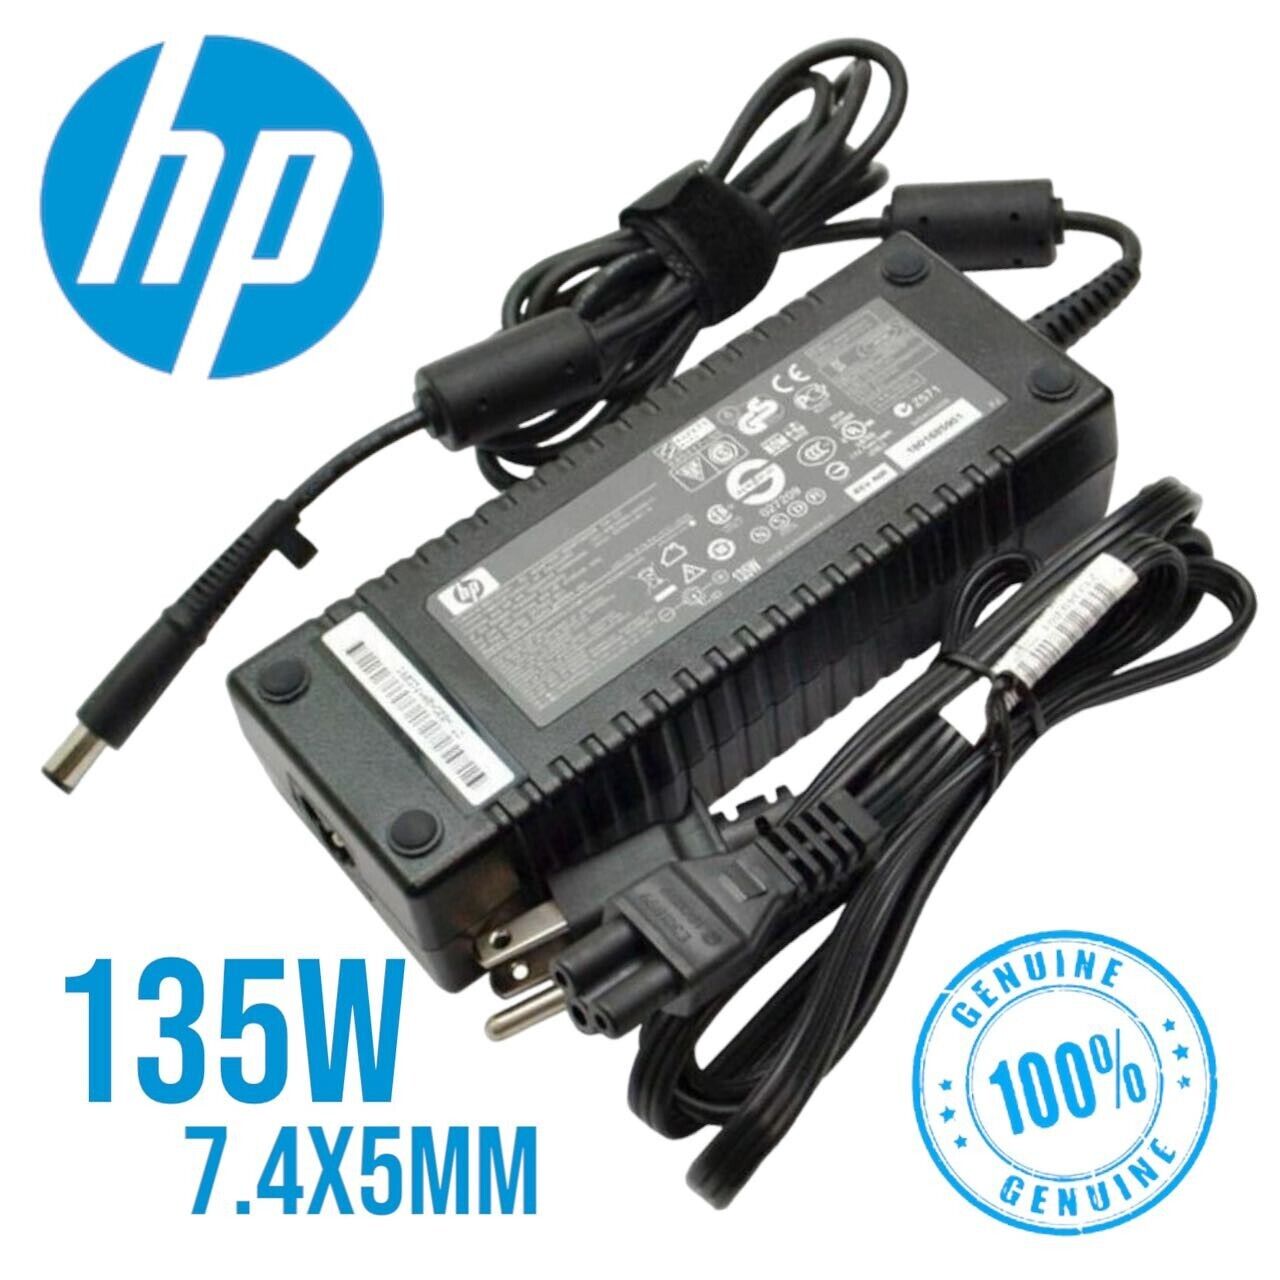 OEM HP 135W AC Power Adapter Charger TouchSmart IQ800 IQ804 IQ810 IQ820 Desktop